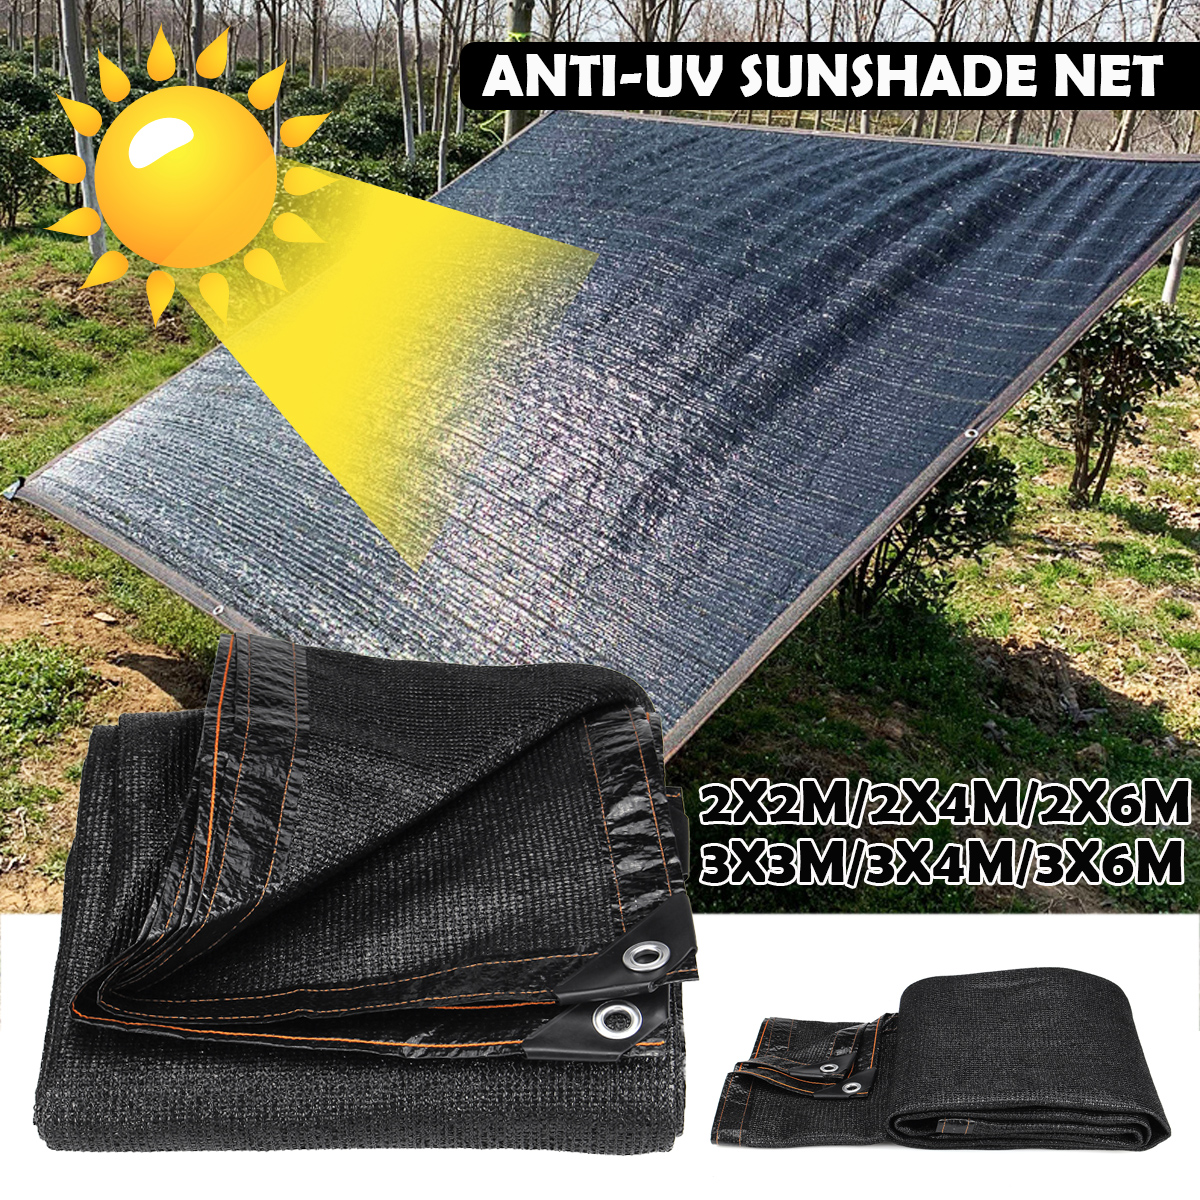 Anti-UV-Sunshade-Net-Outdoor-Garden-Sunscreen-Sunblock-Shade-Cloth-Net-Plant-Greenhouse-Cover-Car-Co-1611437-1